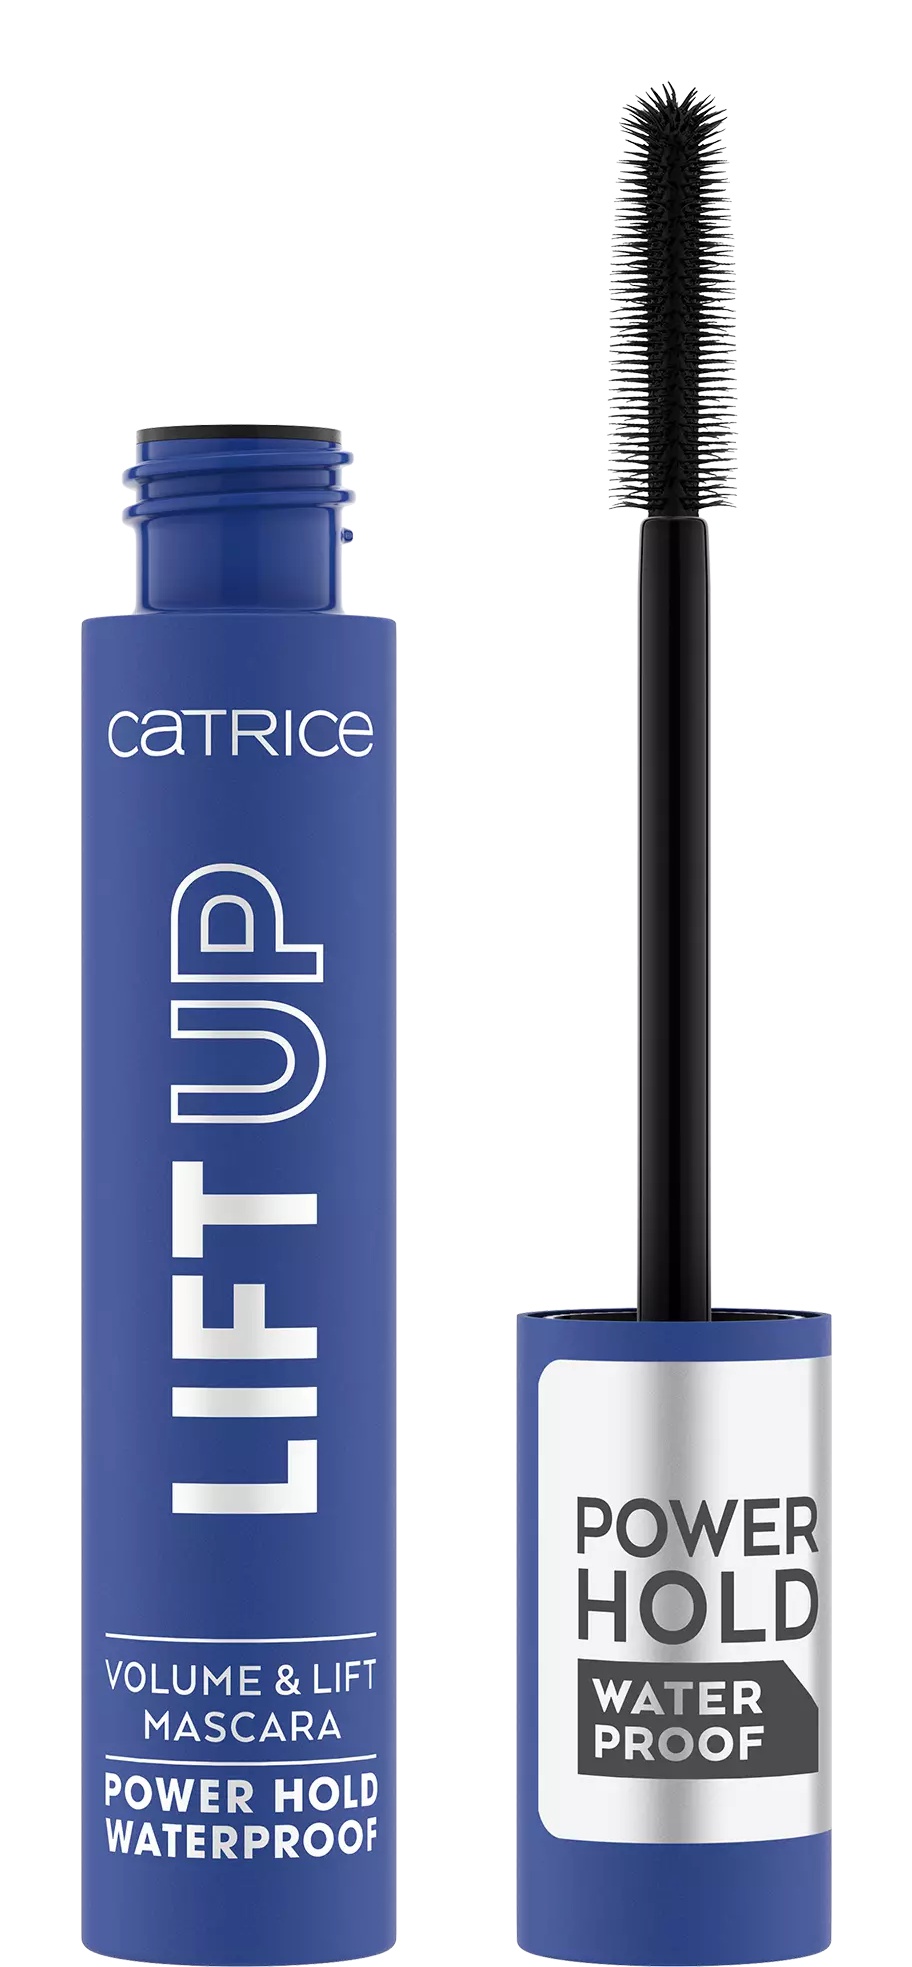 Catrice Lift Up Volume & Lift Mascara Power Hold Waterproof